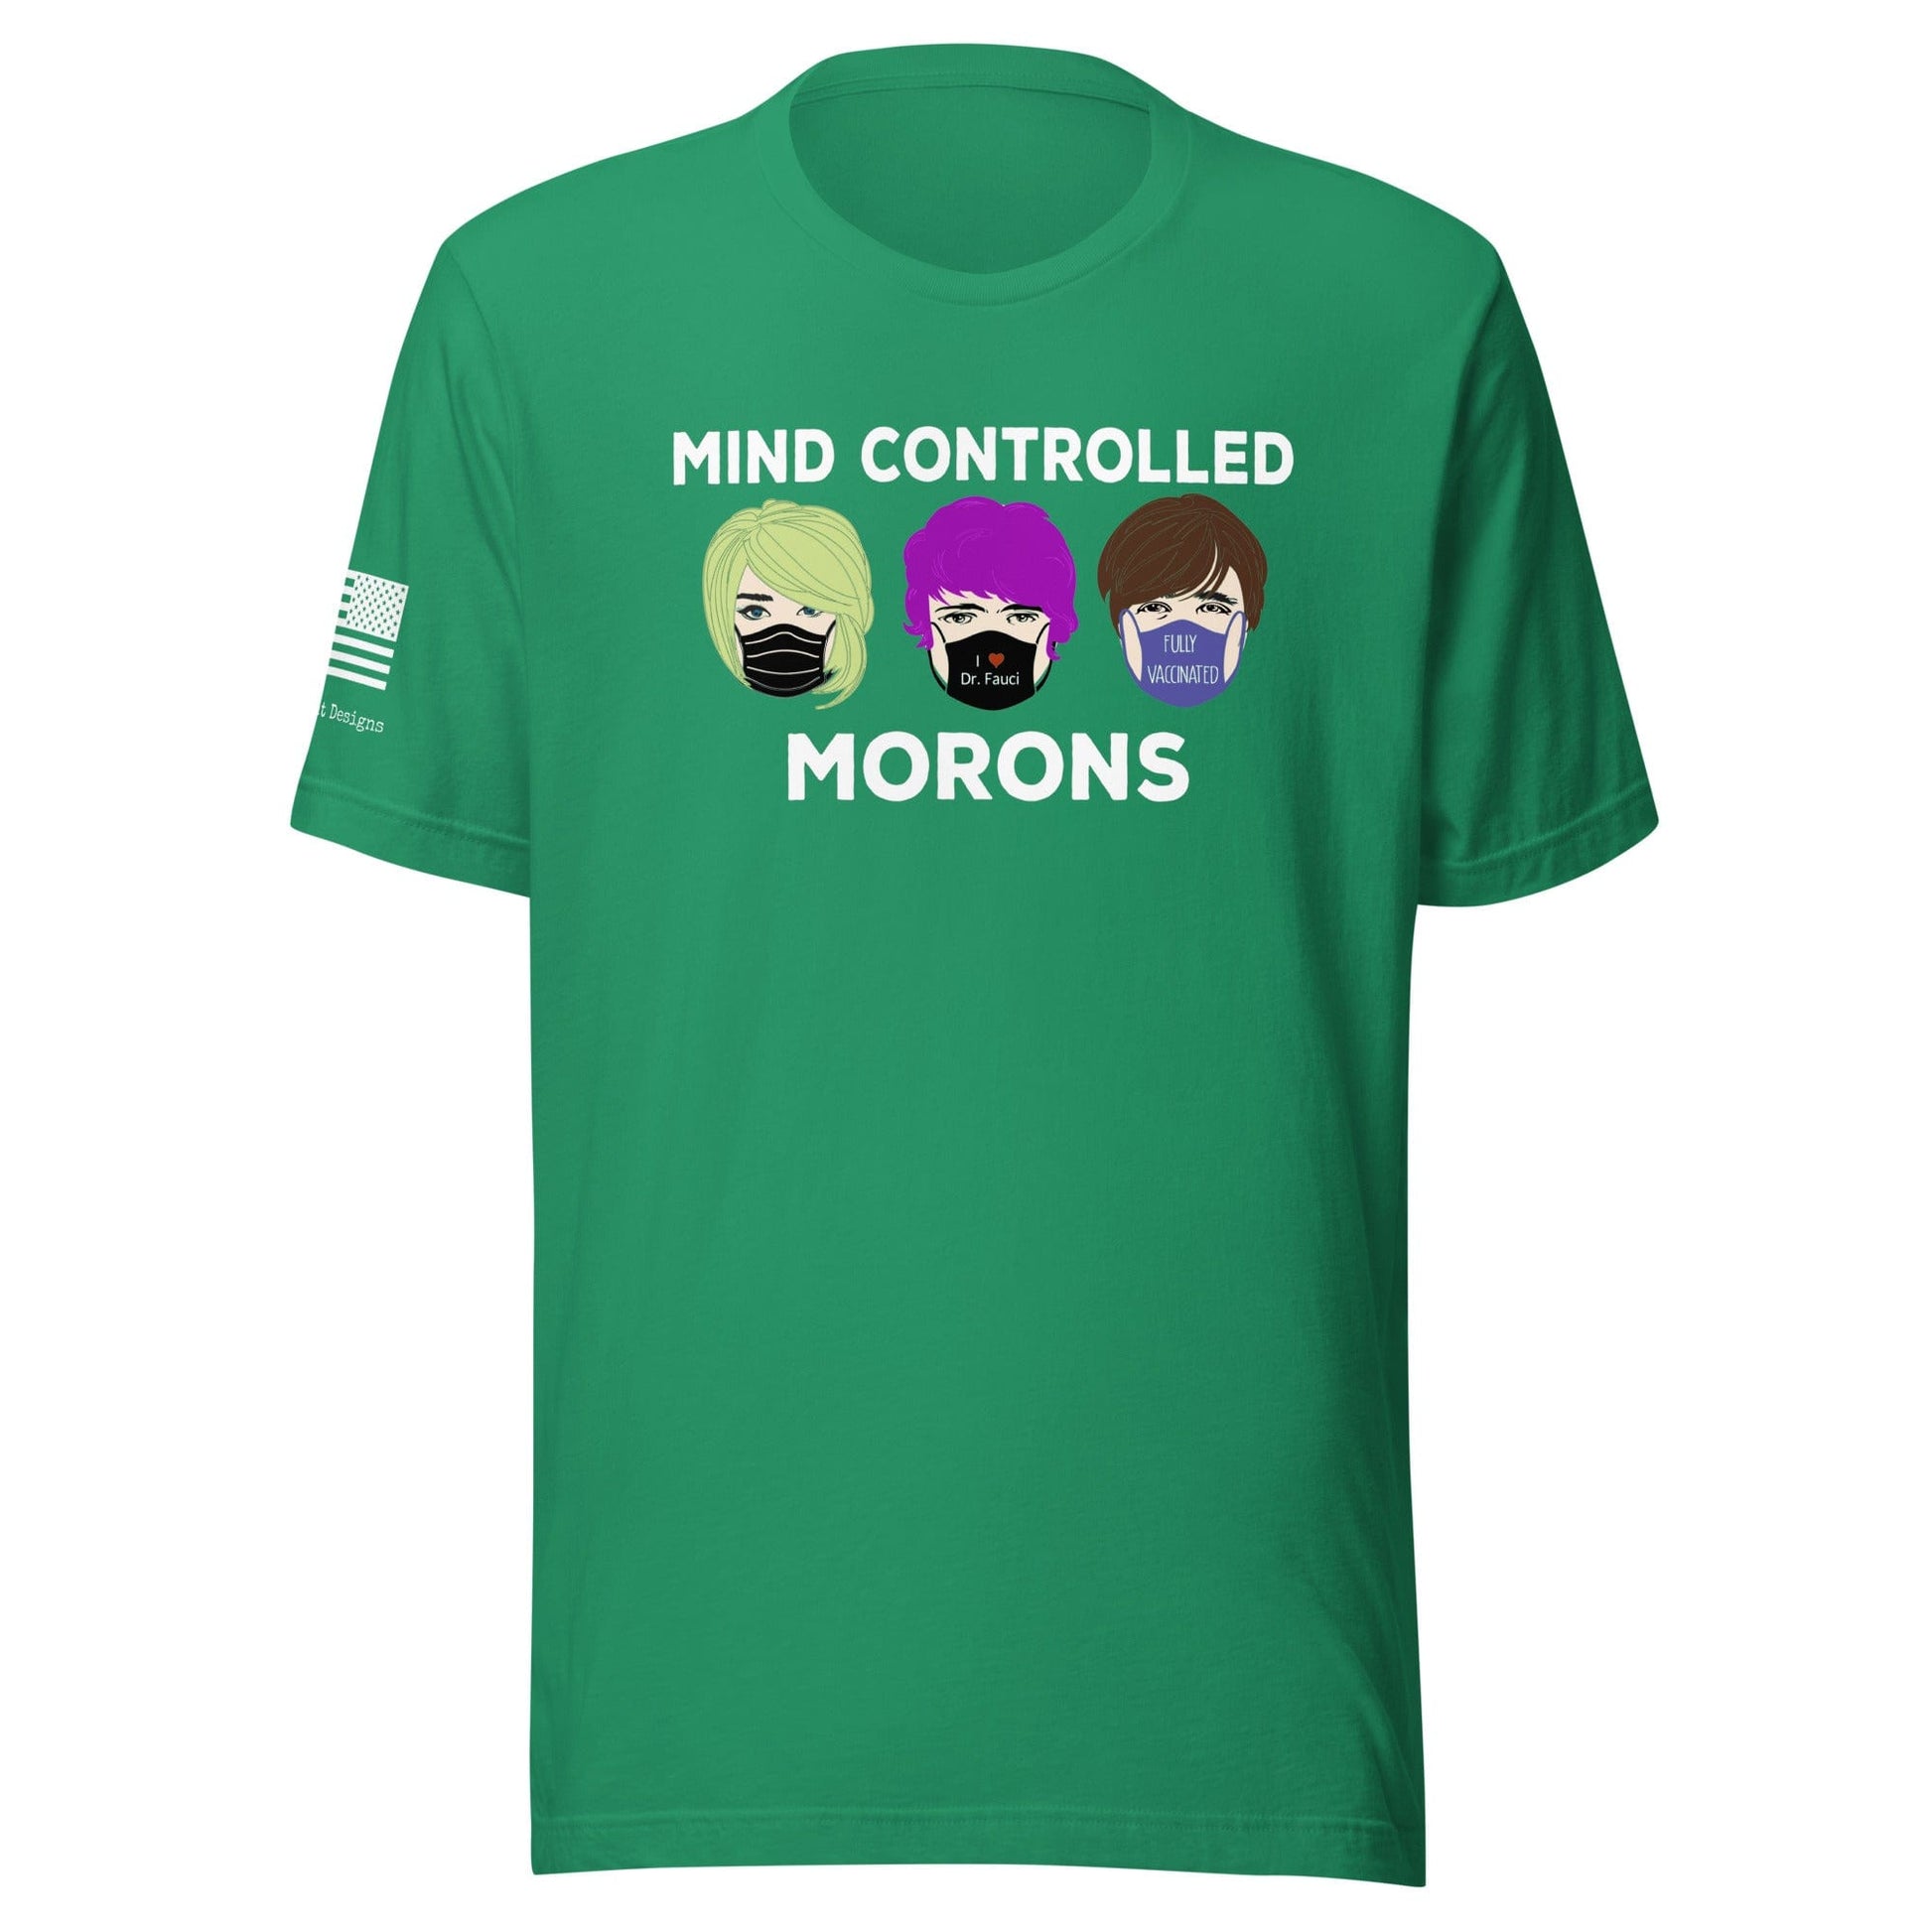 FreedomKat Designs, LLC Kelly / S Mind Controlled Morons T-Shirt